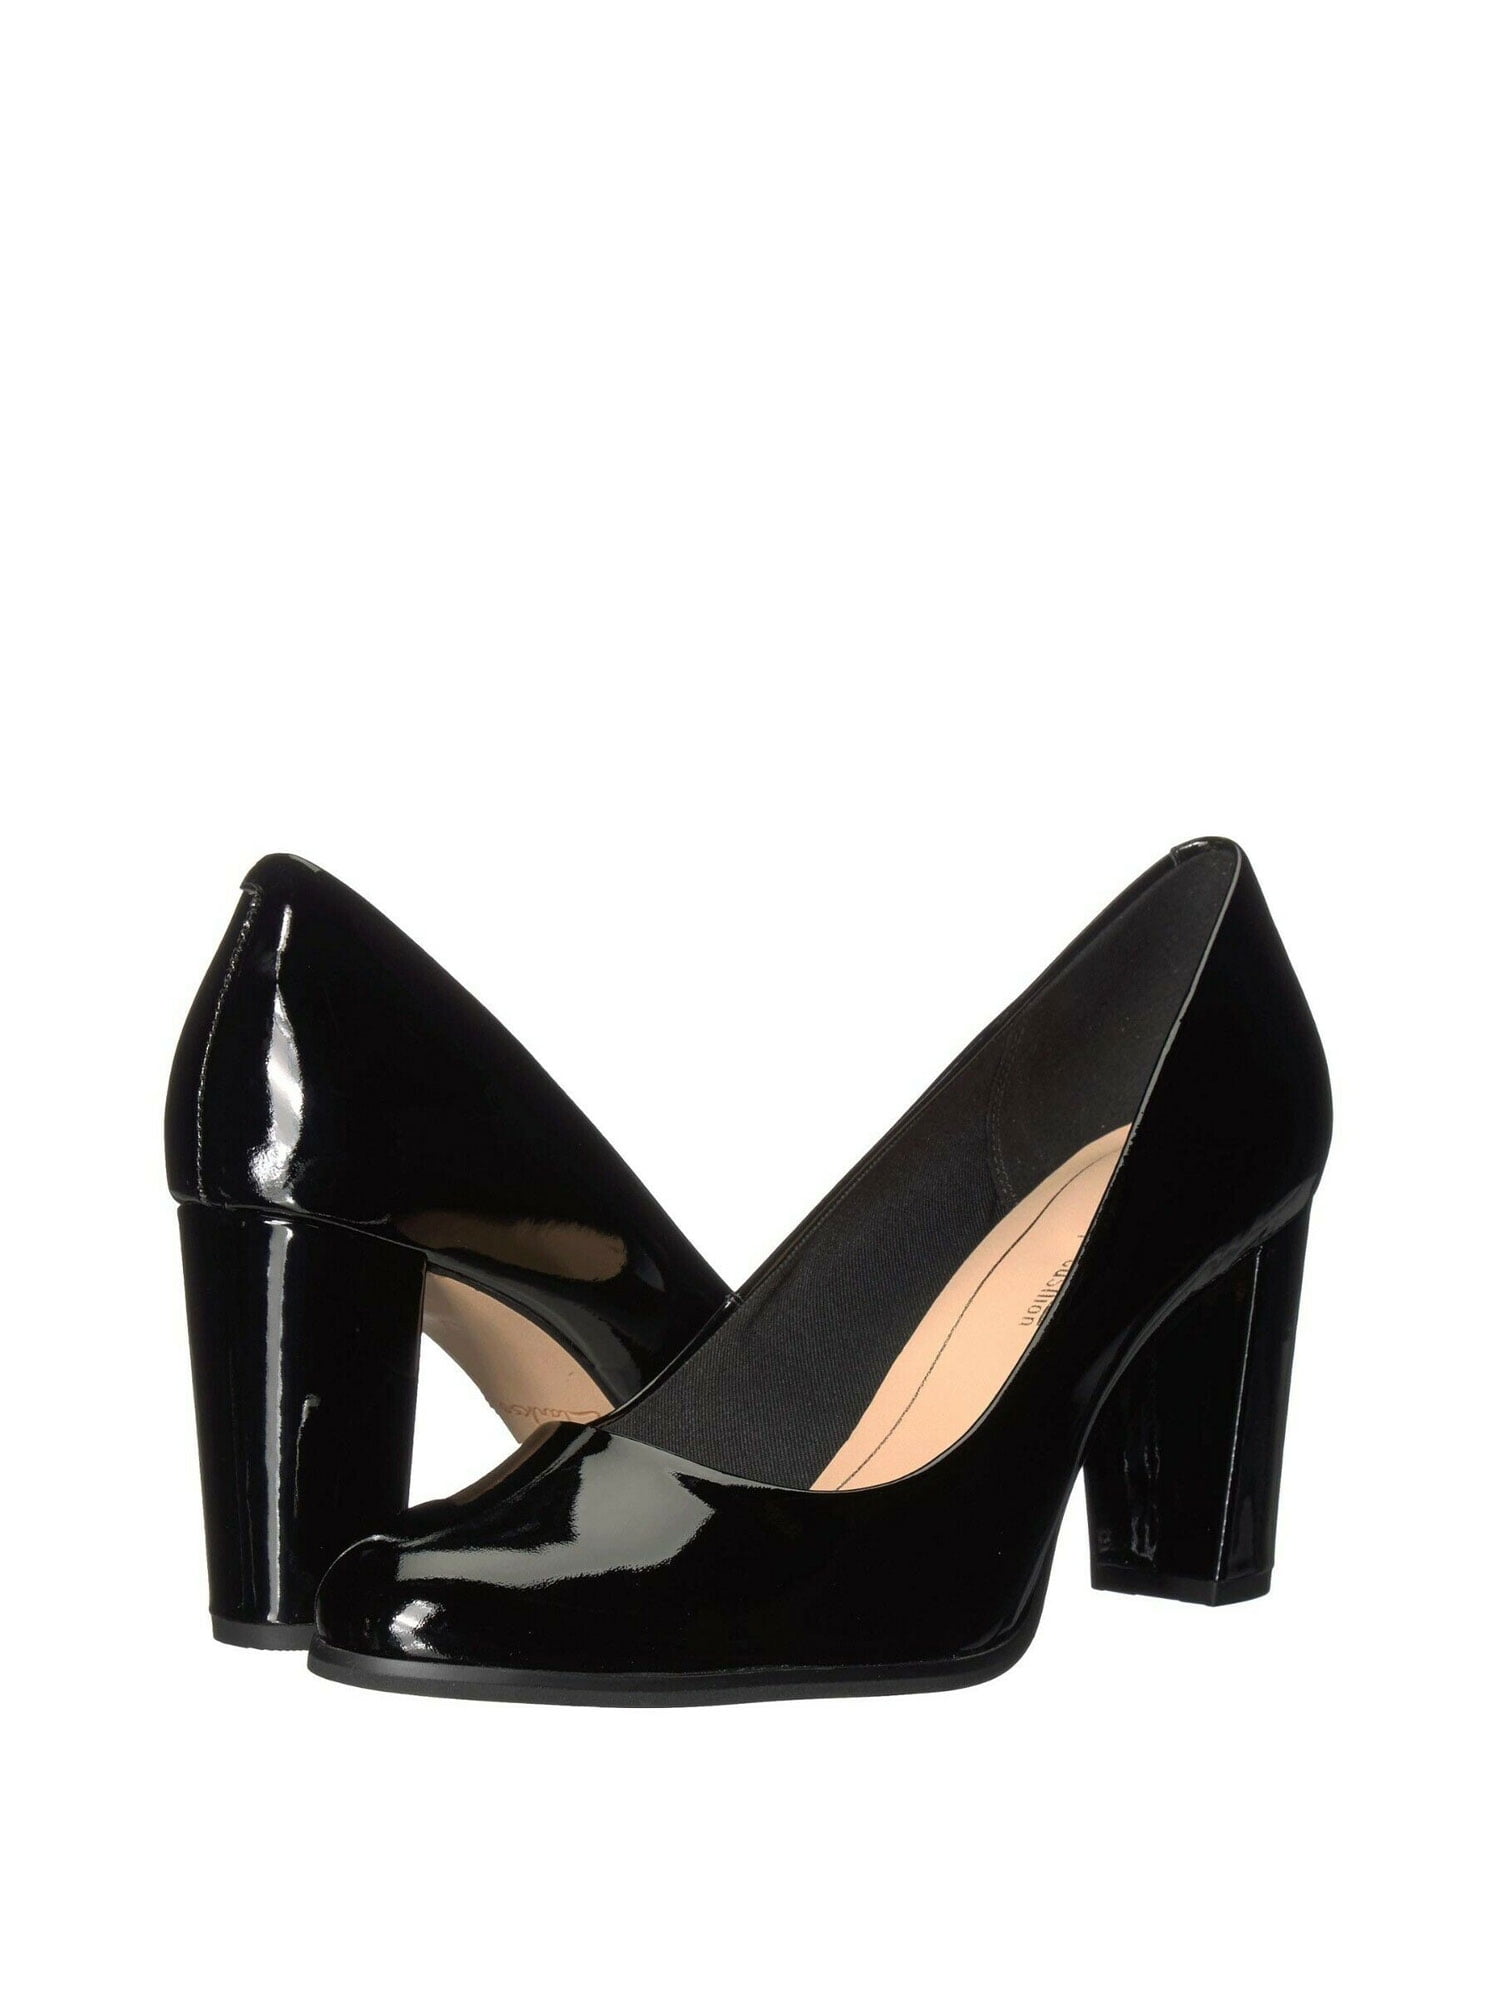 black leather pumps block heel